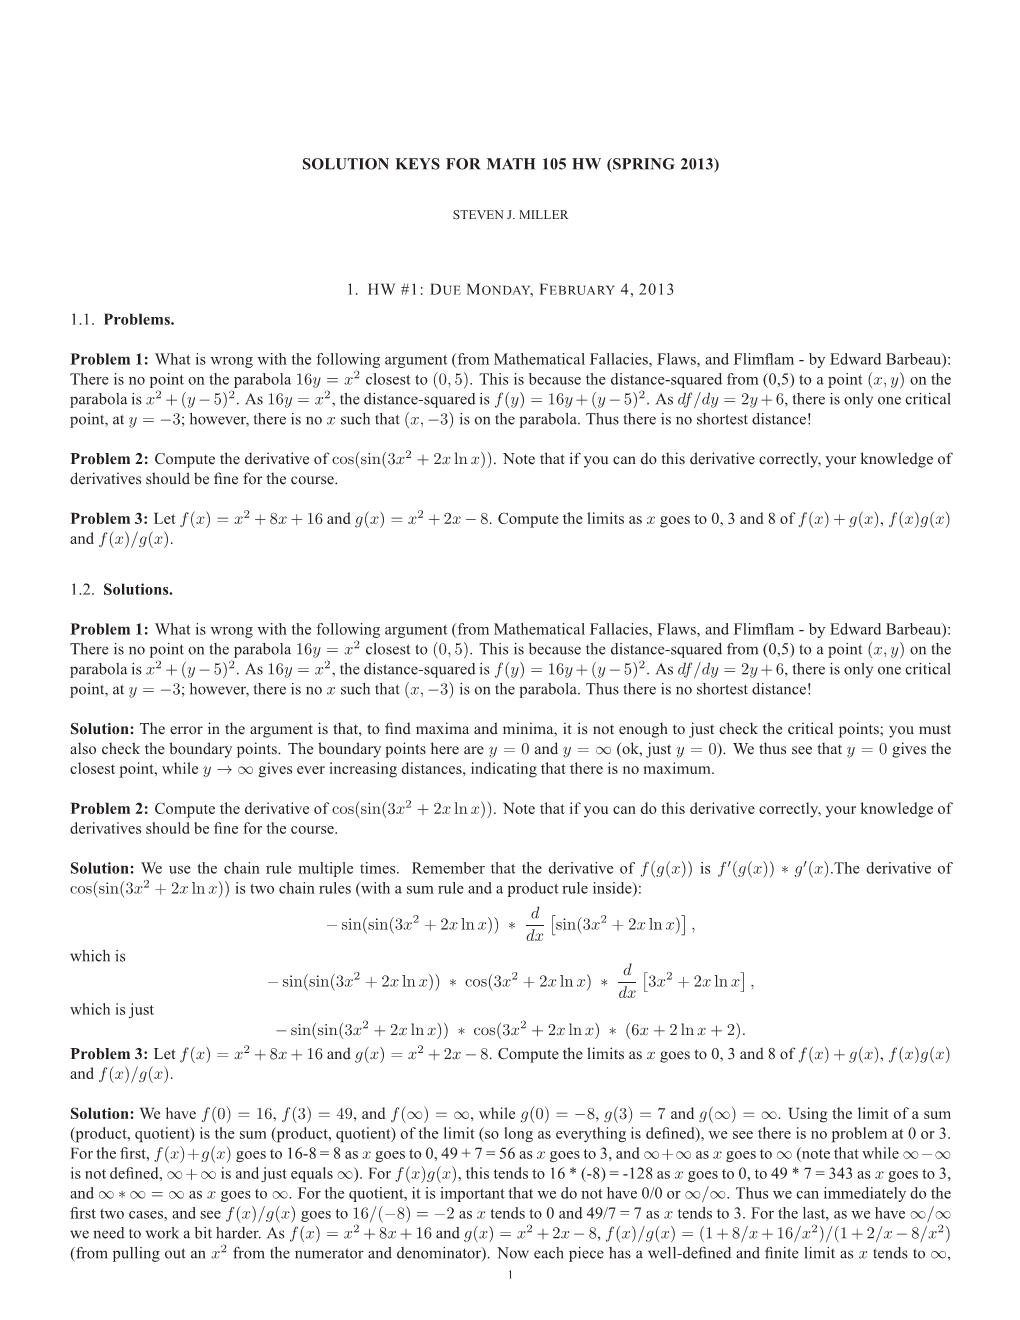 Solution Keys for Math 105 Hw (Spring 2013)